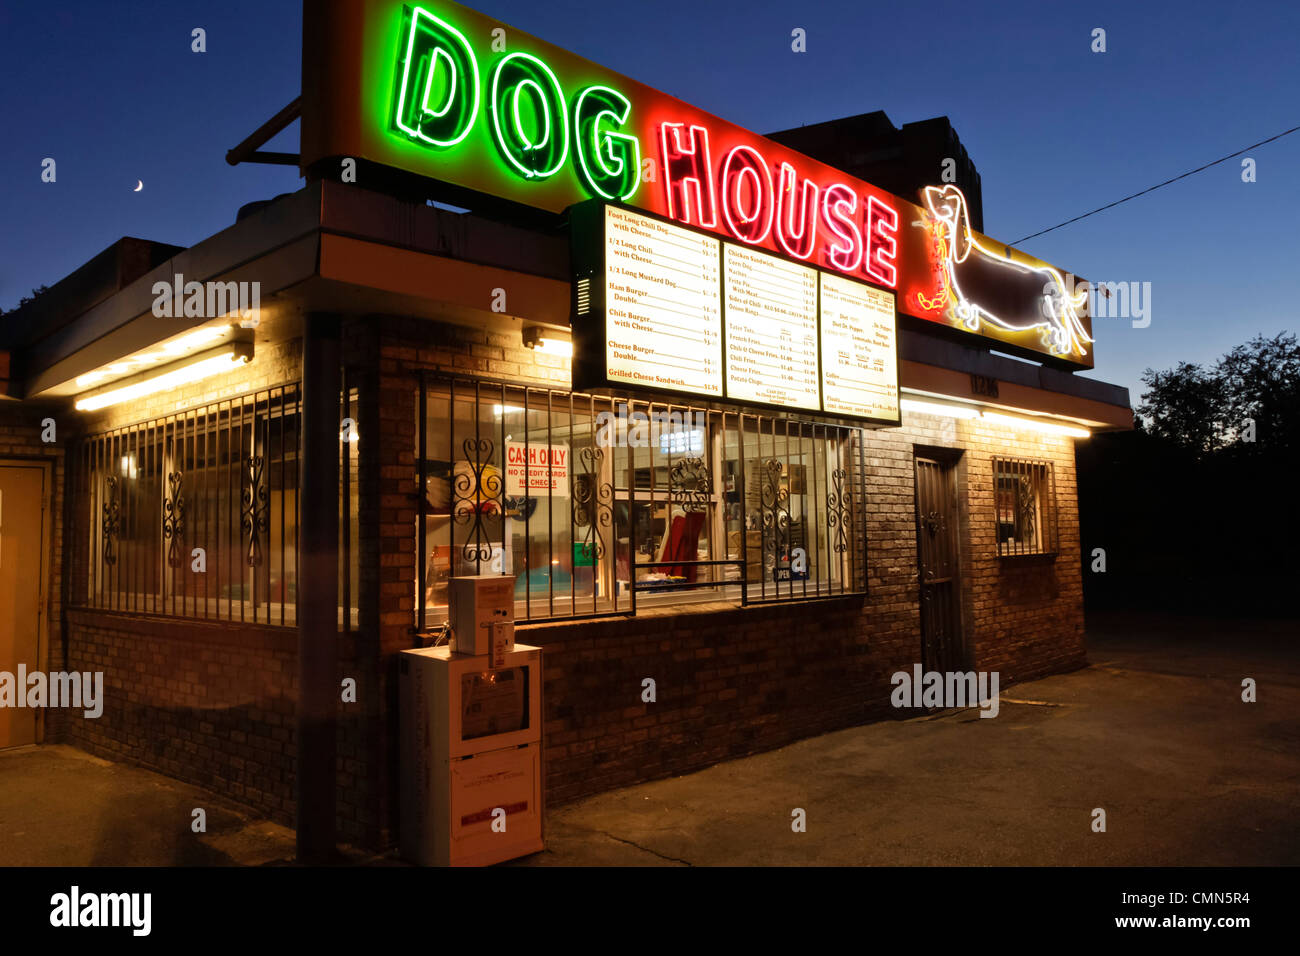 Albuquerque, Nuevo México, Estados Unidos. La ruta 66, Dog House, hot dog stand. Foto de stock